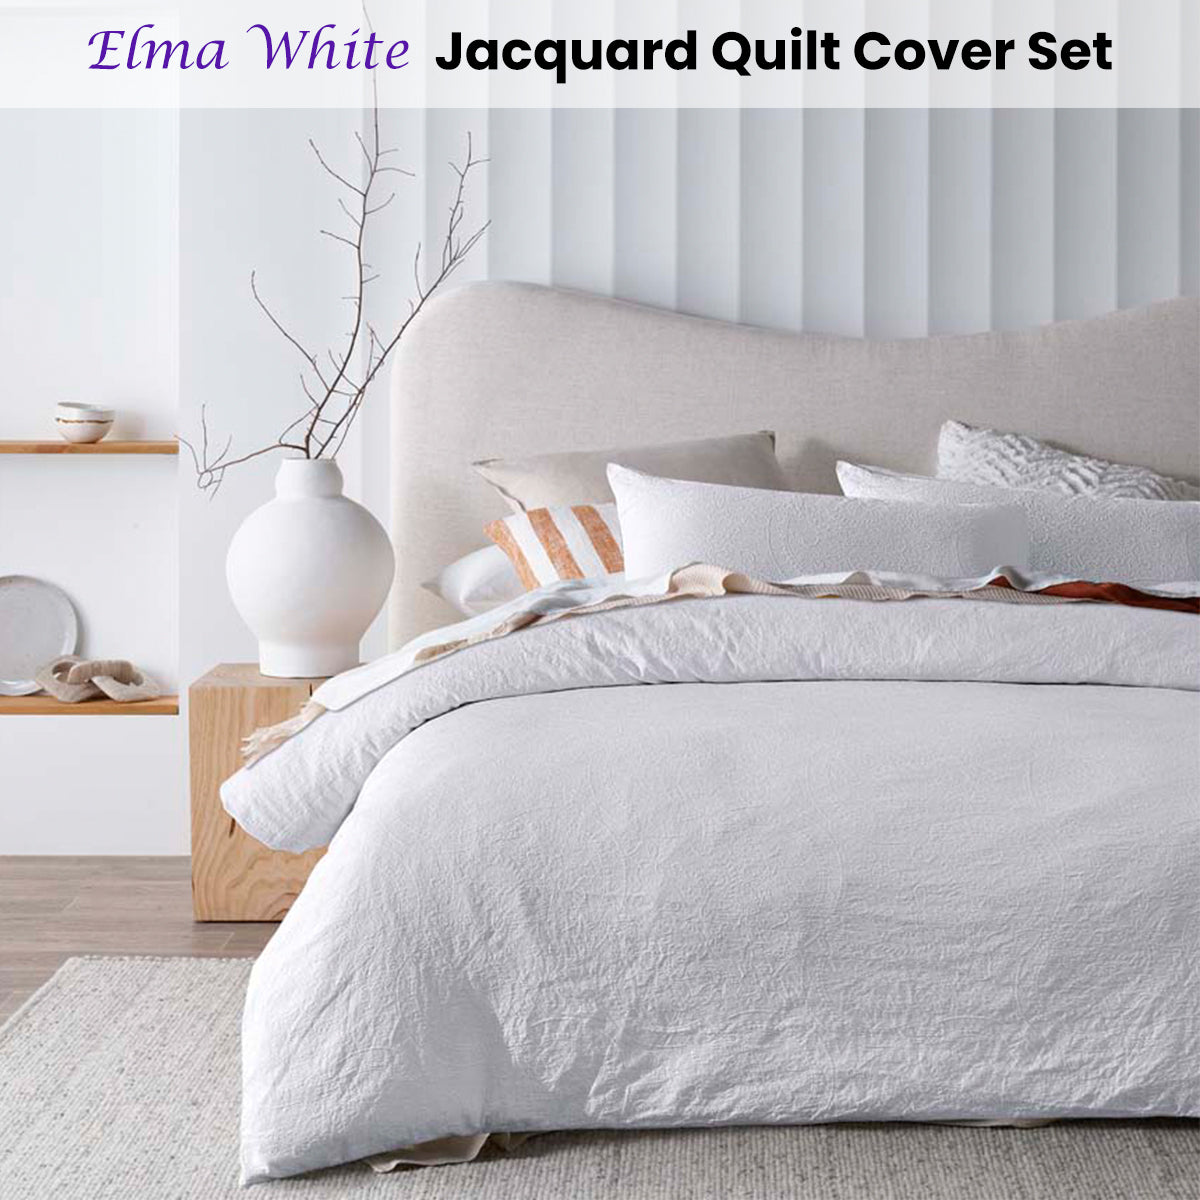 Super King Elma White Jacquard Quilt Cover Set